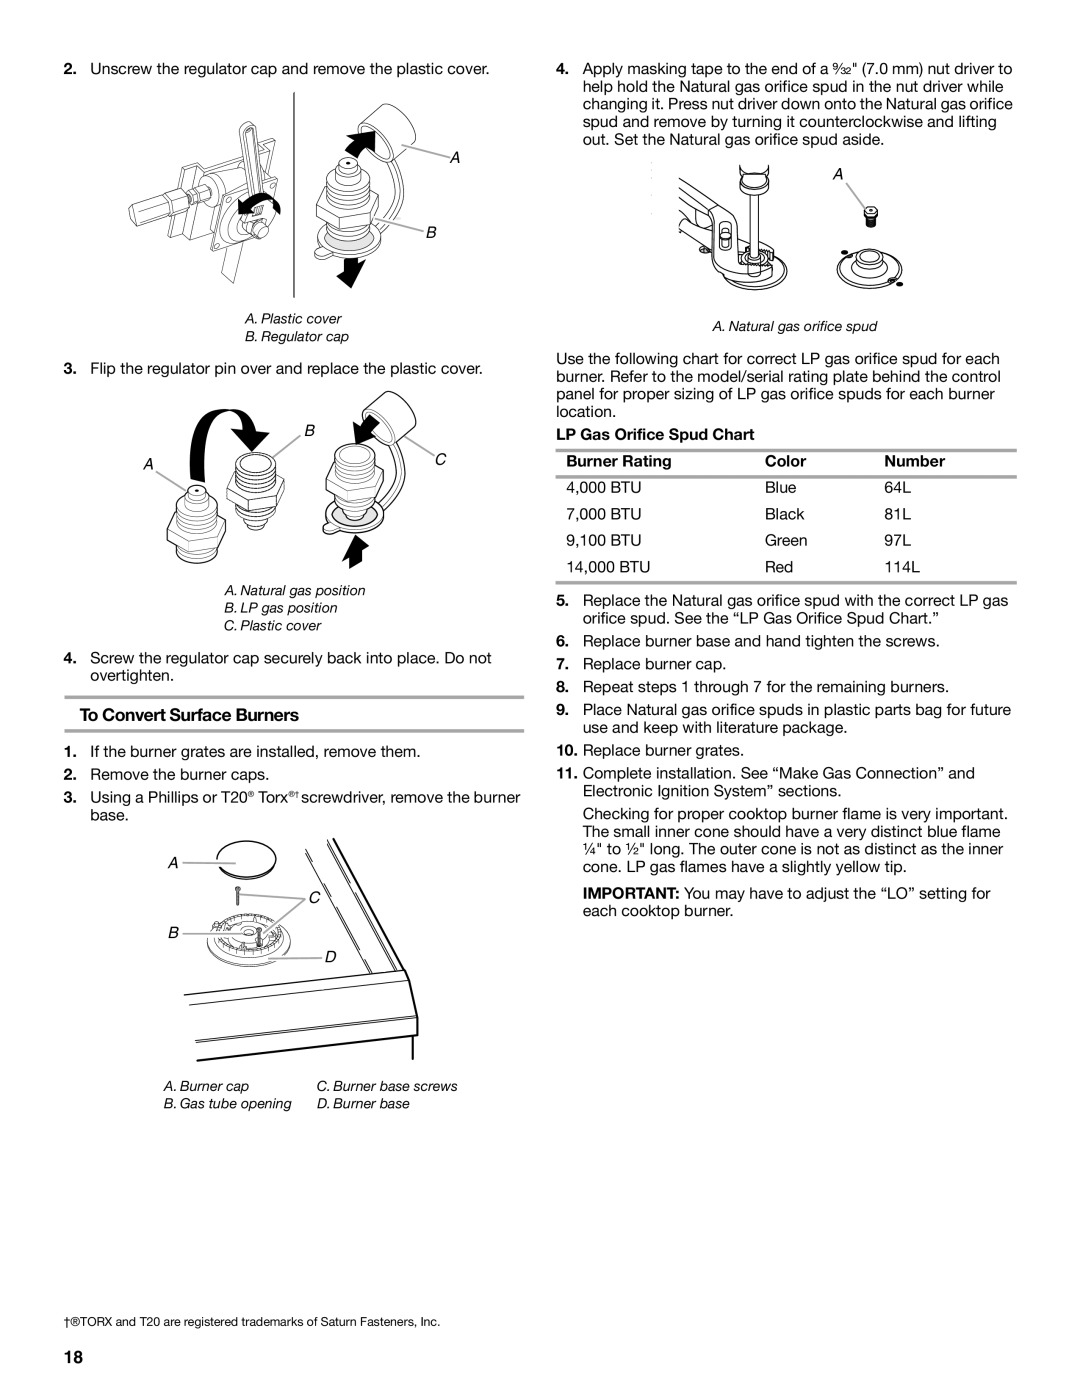 KitchenAid W10526086A To Convert Surface Burners, B A C, A C B D, LP Gas Orifice Spud Chart, Burner Rating, Color, Number 